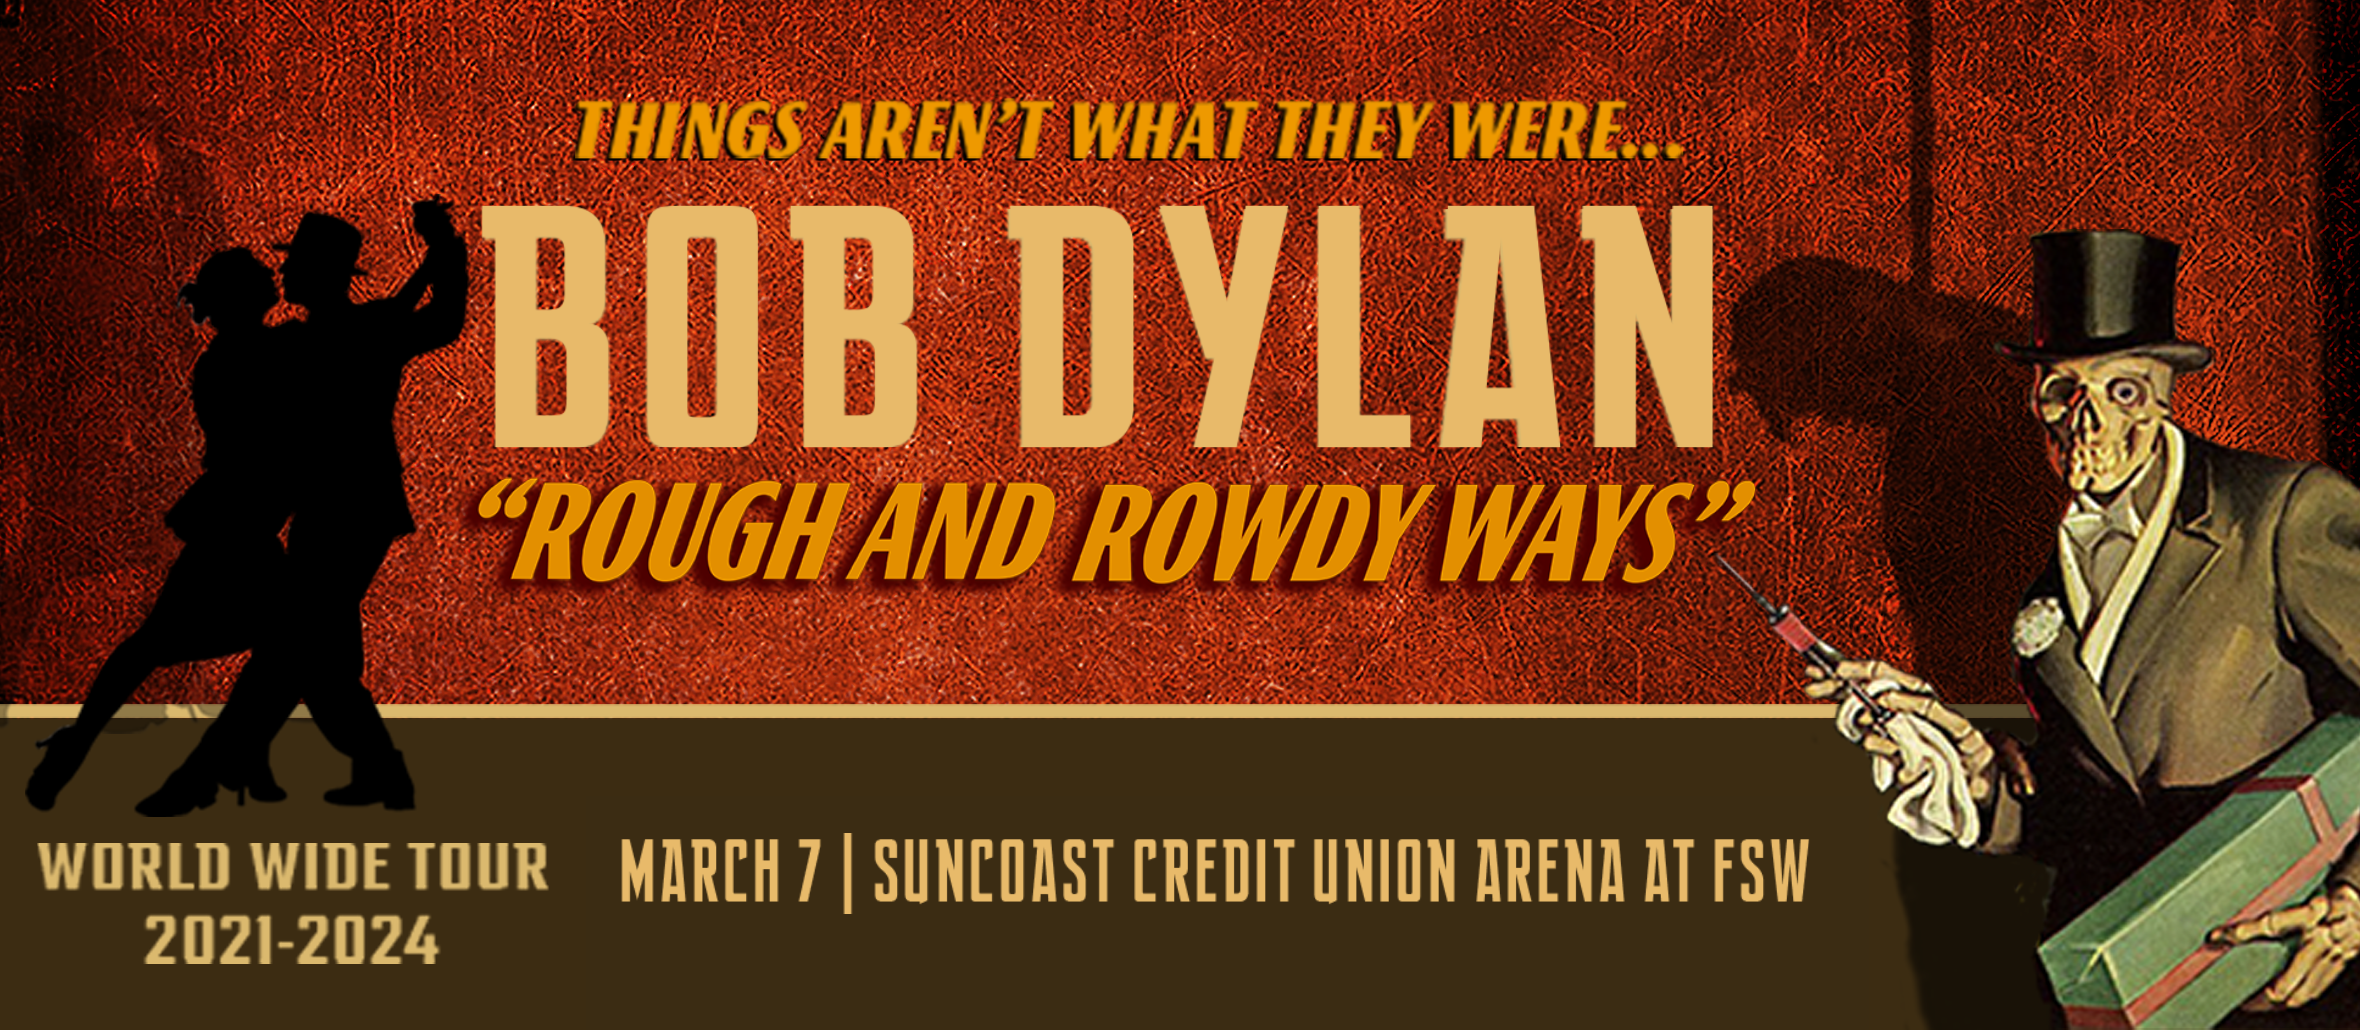 Bob Dylan "Rough and Rowdy Ways" Tour